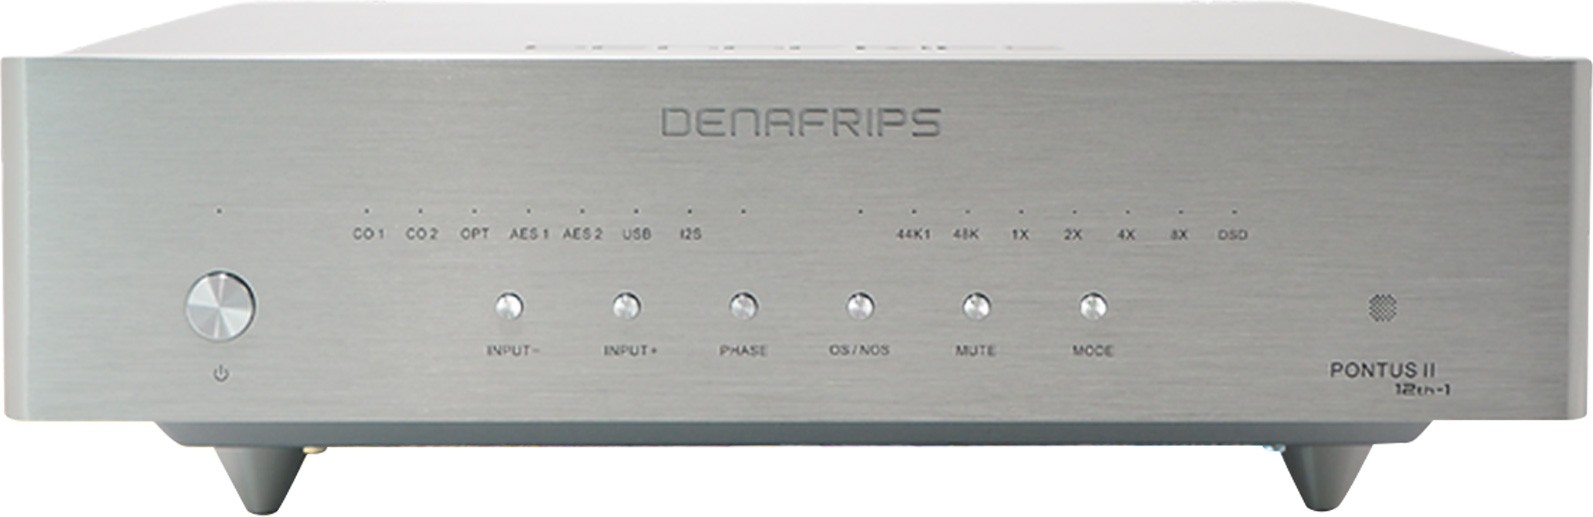 DENAFRIPS PONTUS II 12TH-1 DAC R2R NOS Balanced 1536kHz DSD1024 Silver